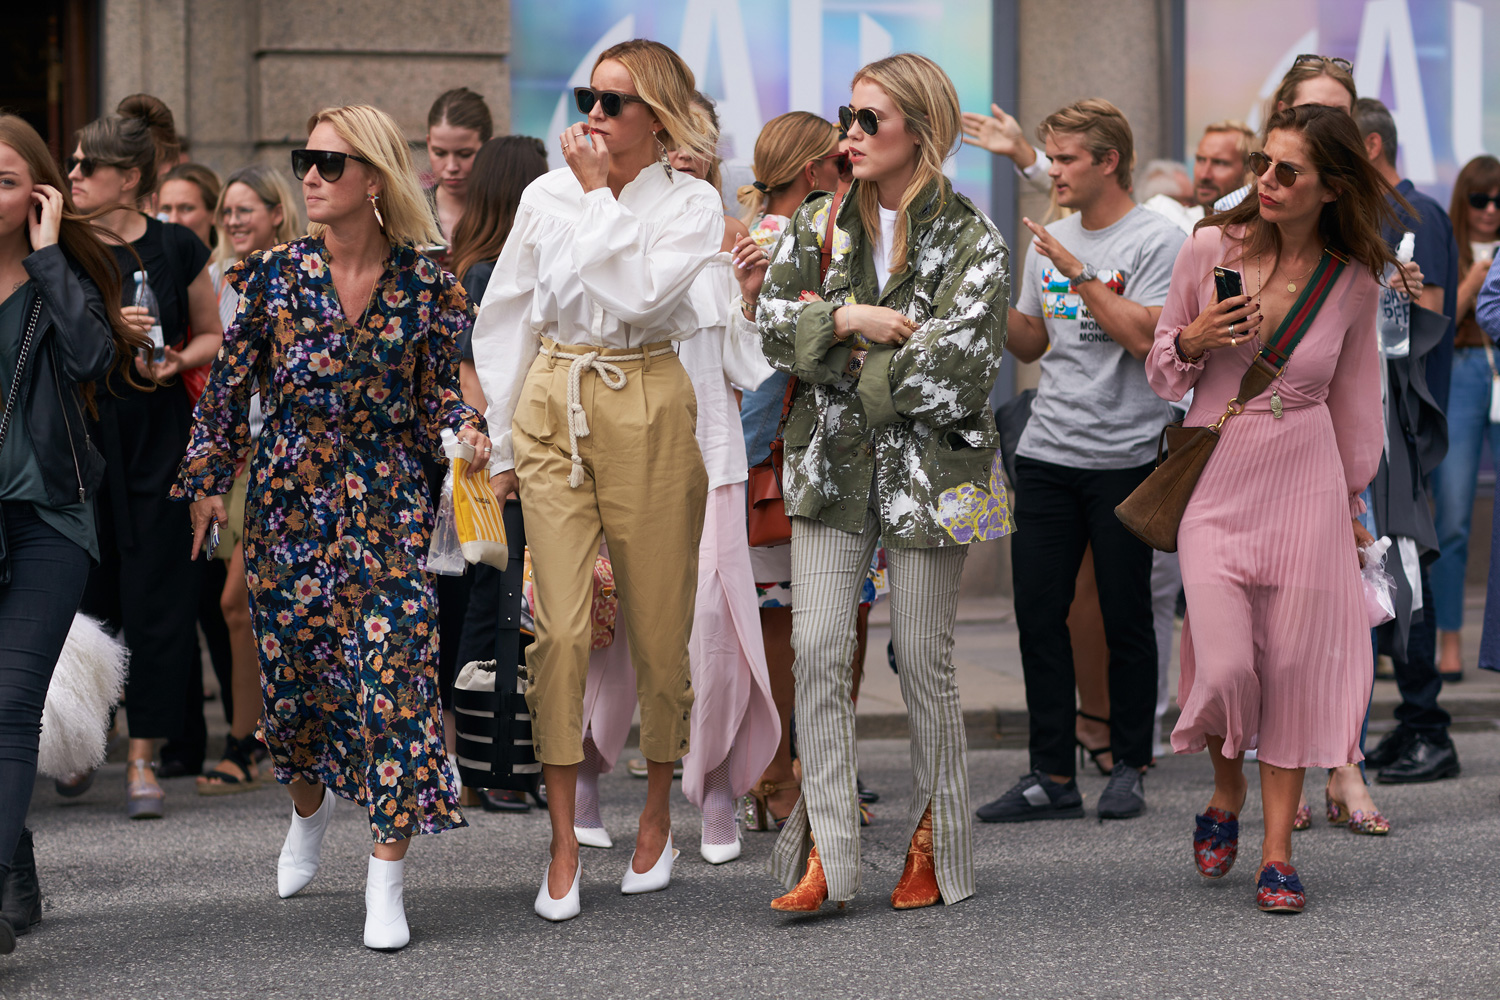 Scandinavian style: Danish women lead the fashion pack